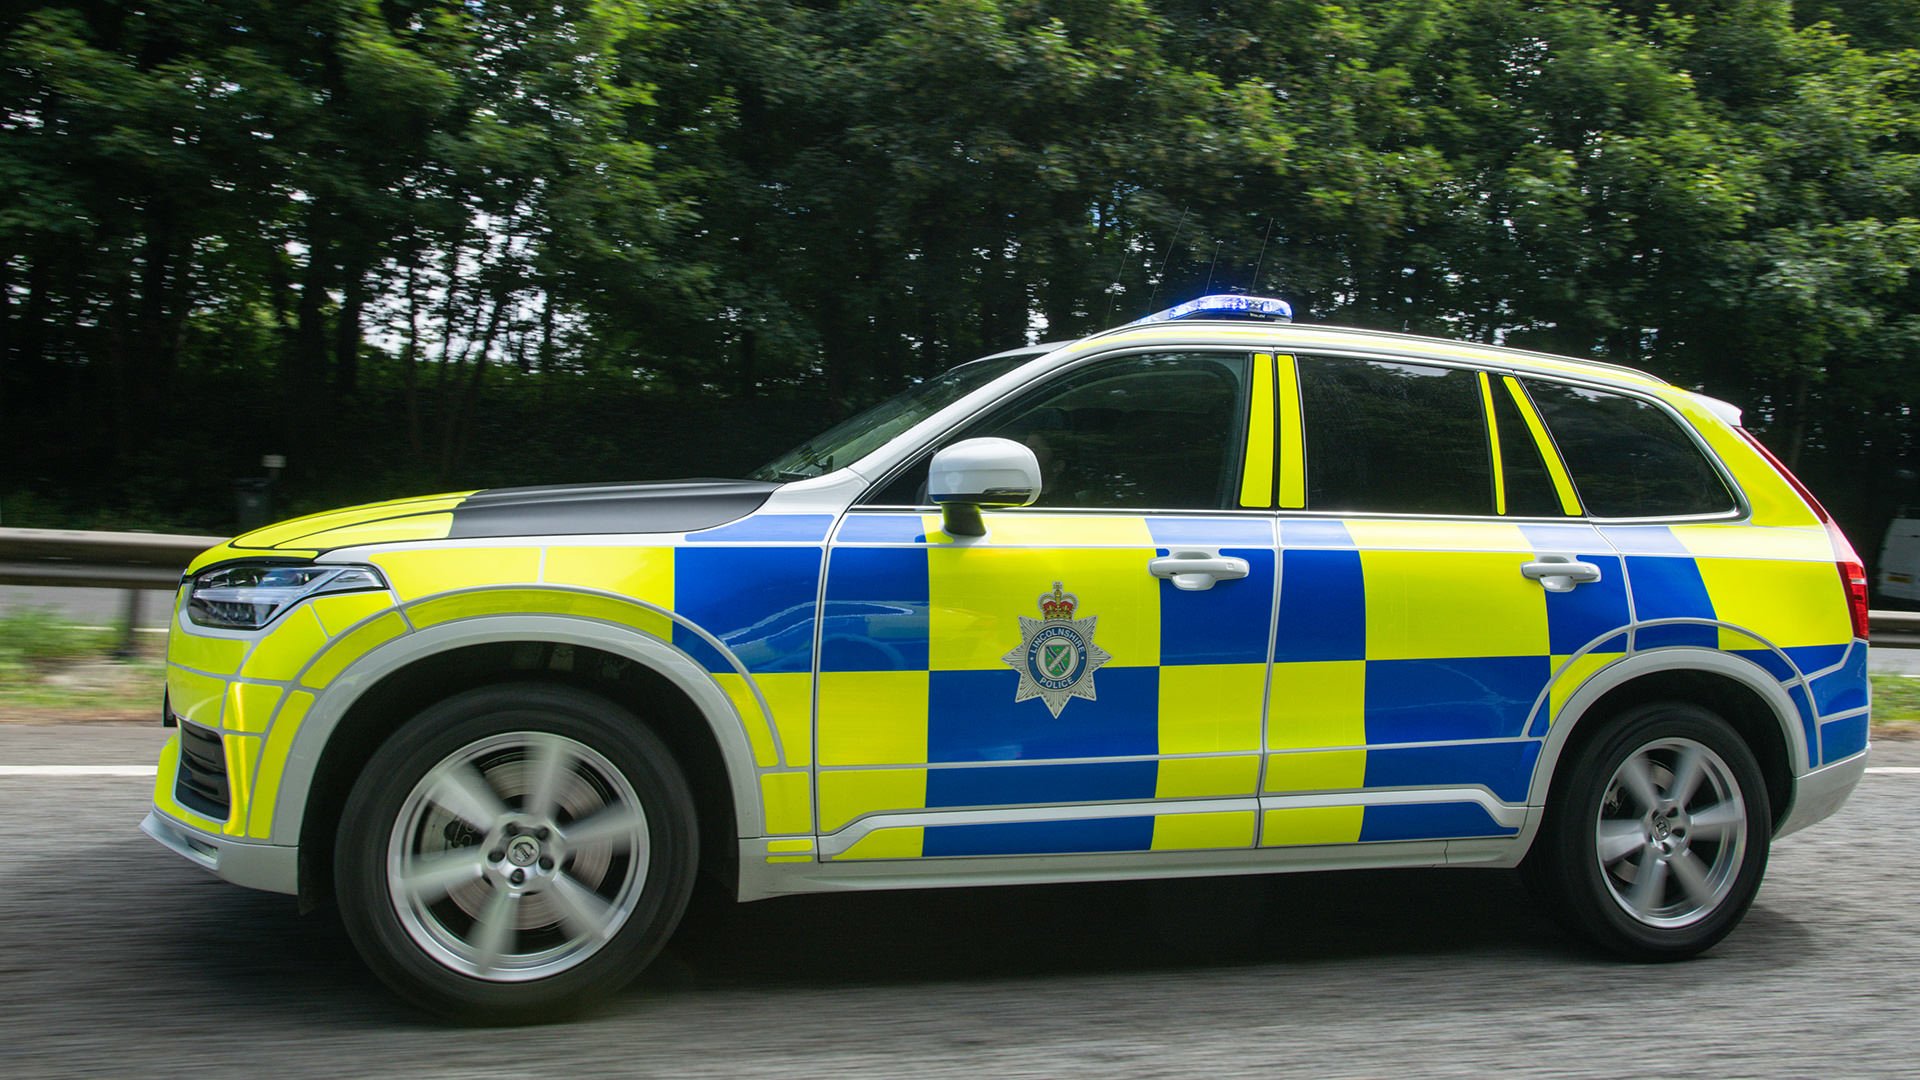 lincs police stock lincolnshire logo